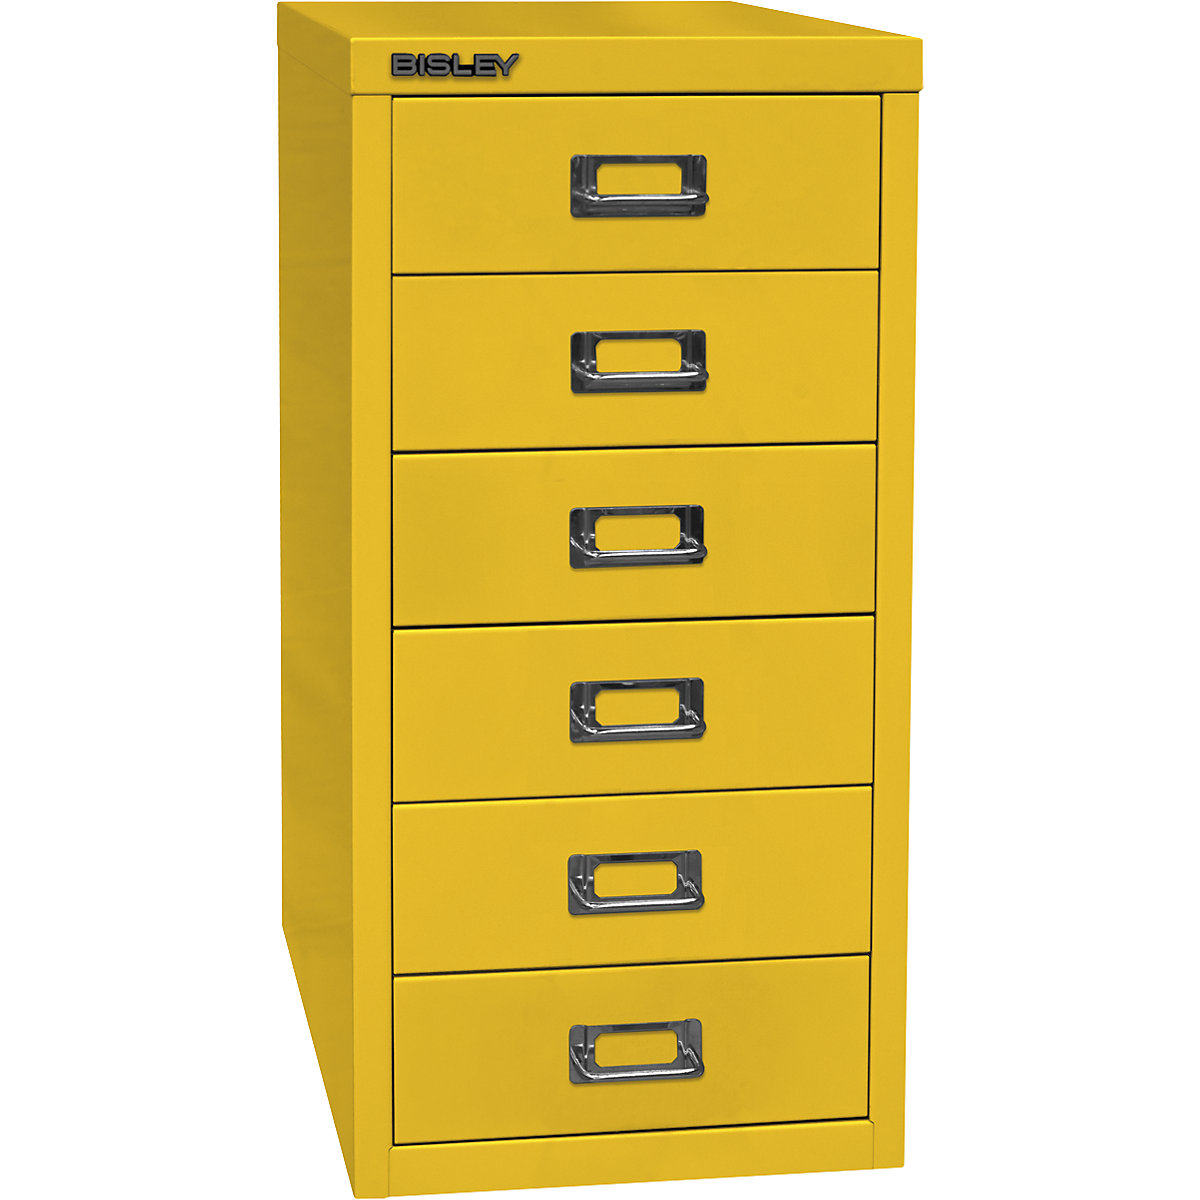 MultiDrawer™ 29 series – BISLEY, A4, 6 drawers, yellow-8